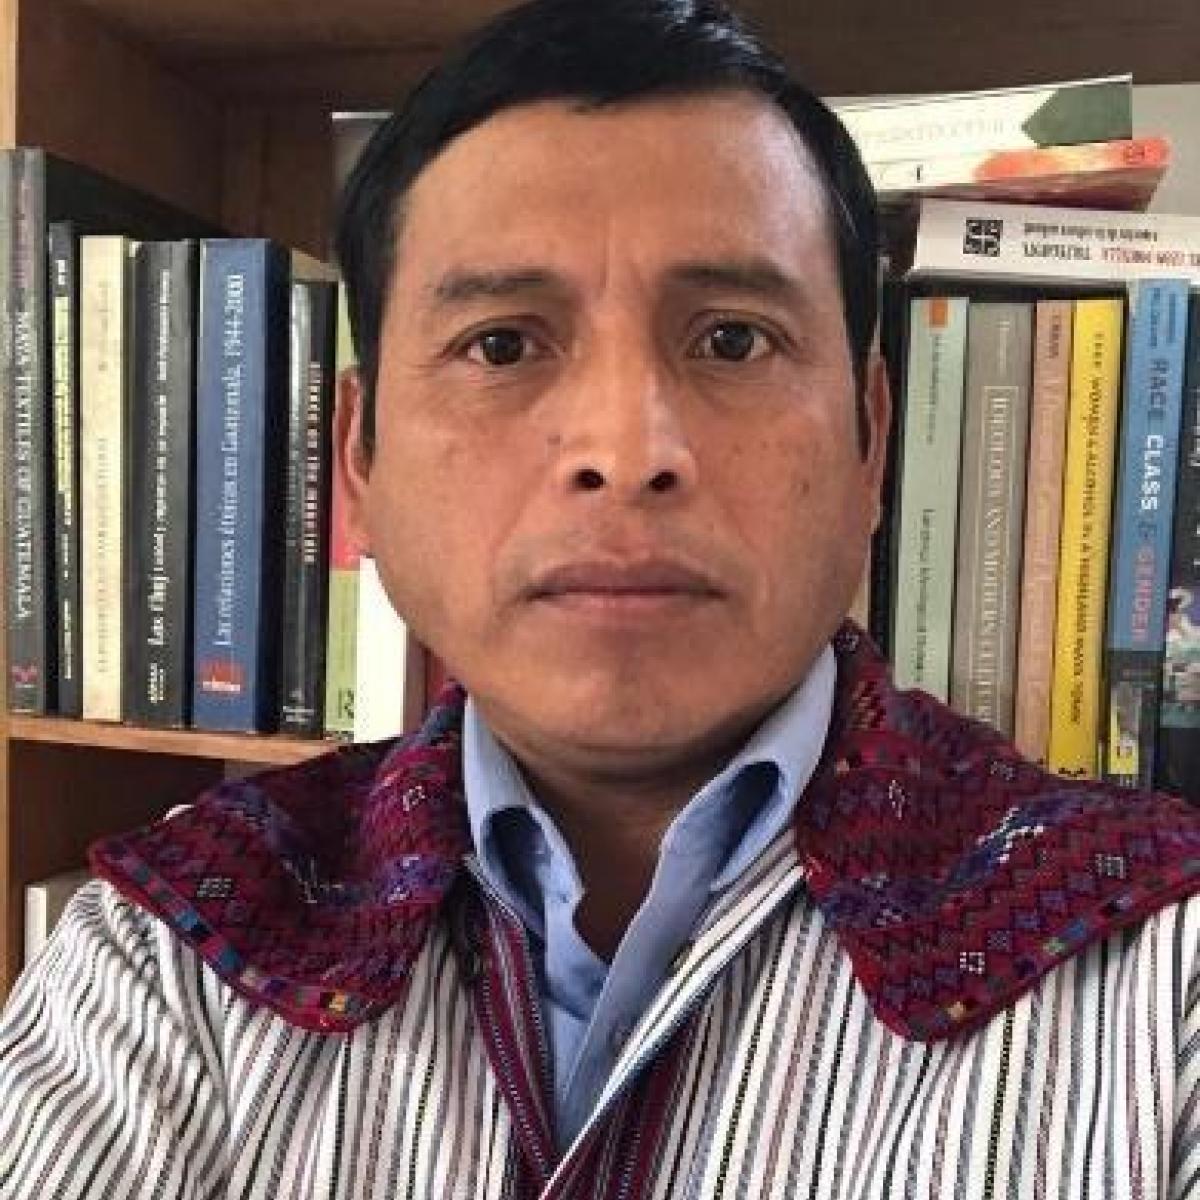 Dr. Ajb'ee Jimenez USAID/Guatemala’s Senior Advisor for Indigenous Peoples Issues